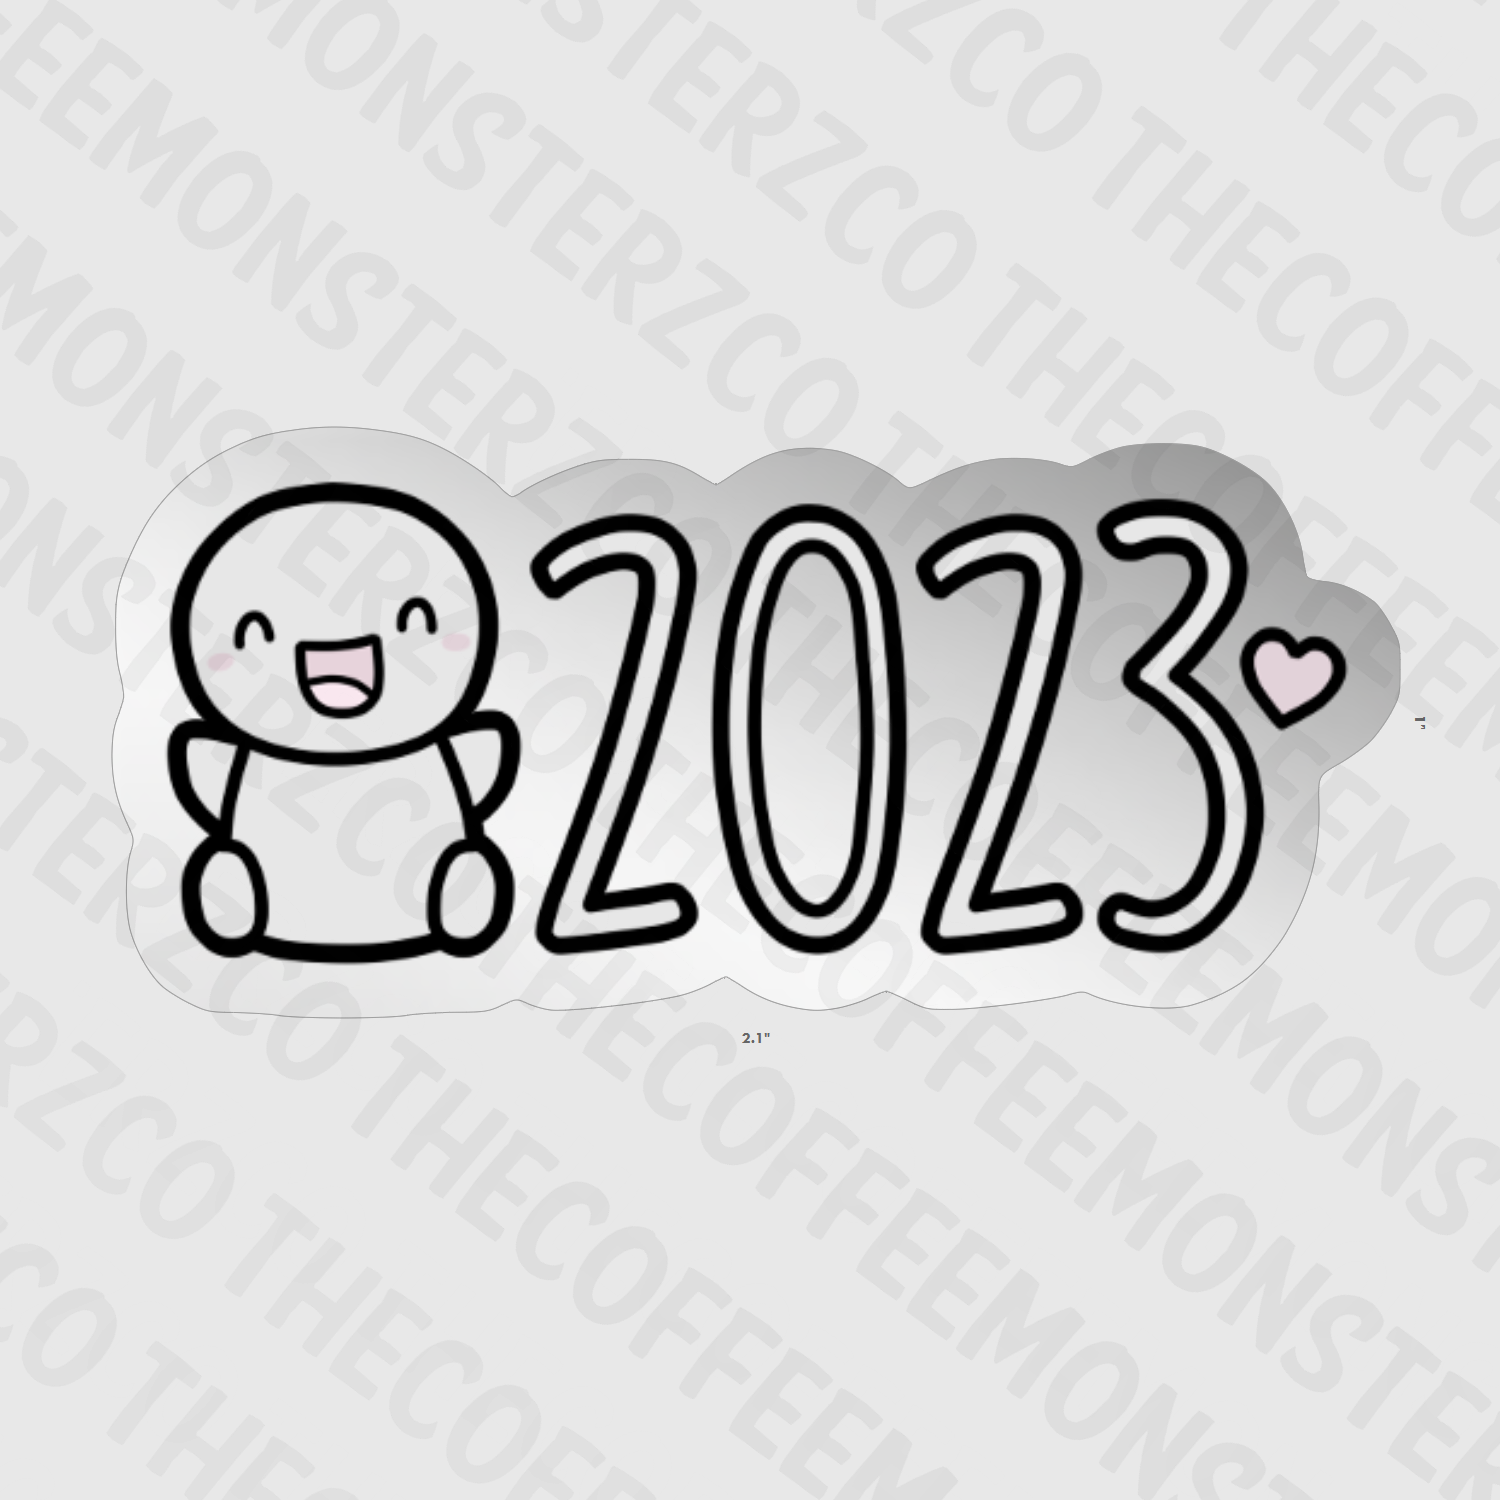 2023 Emoti Vinyl Stickers